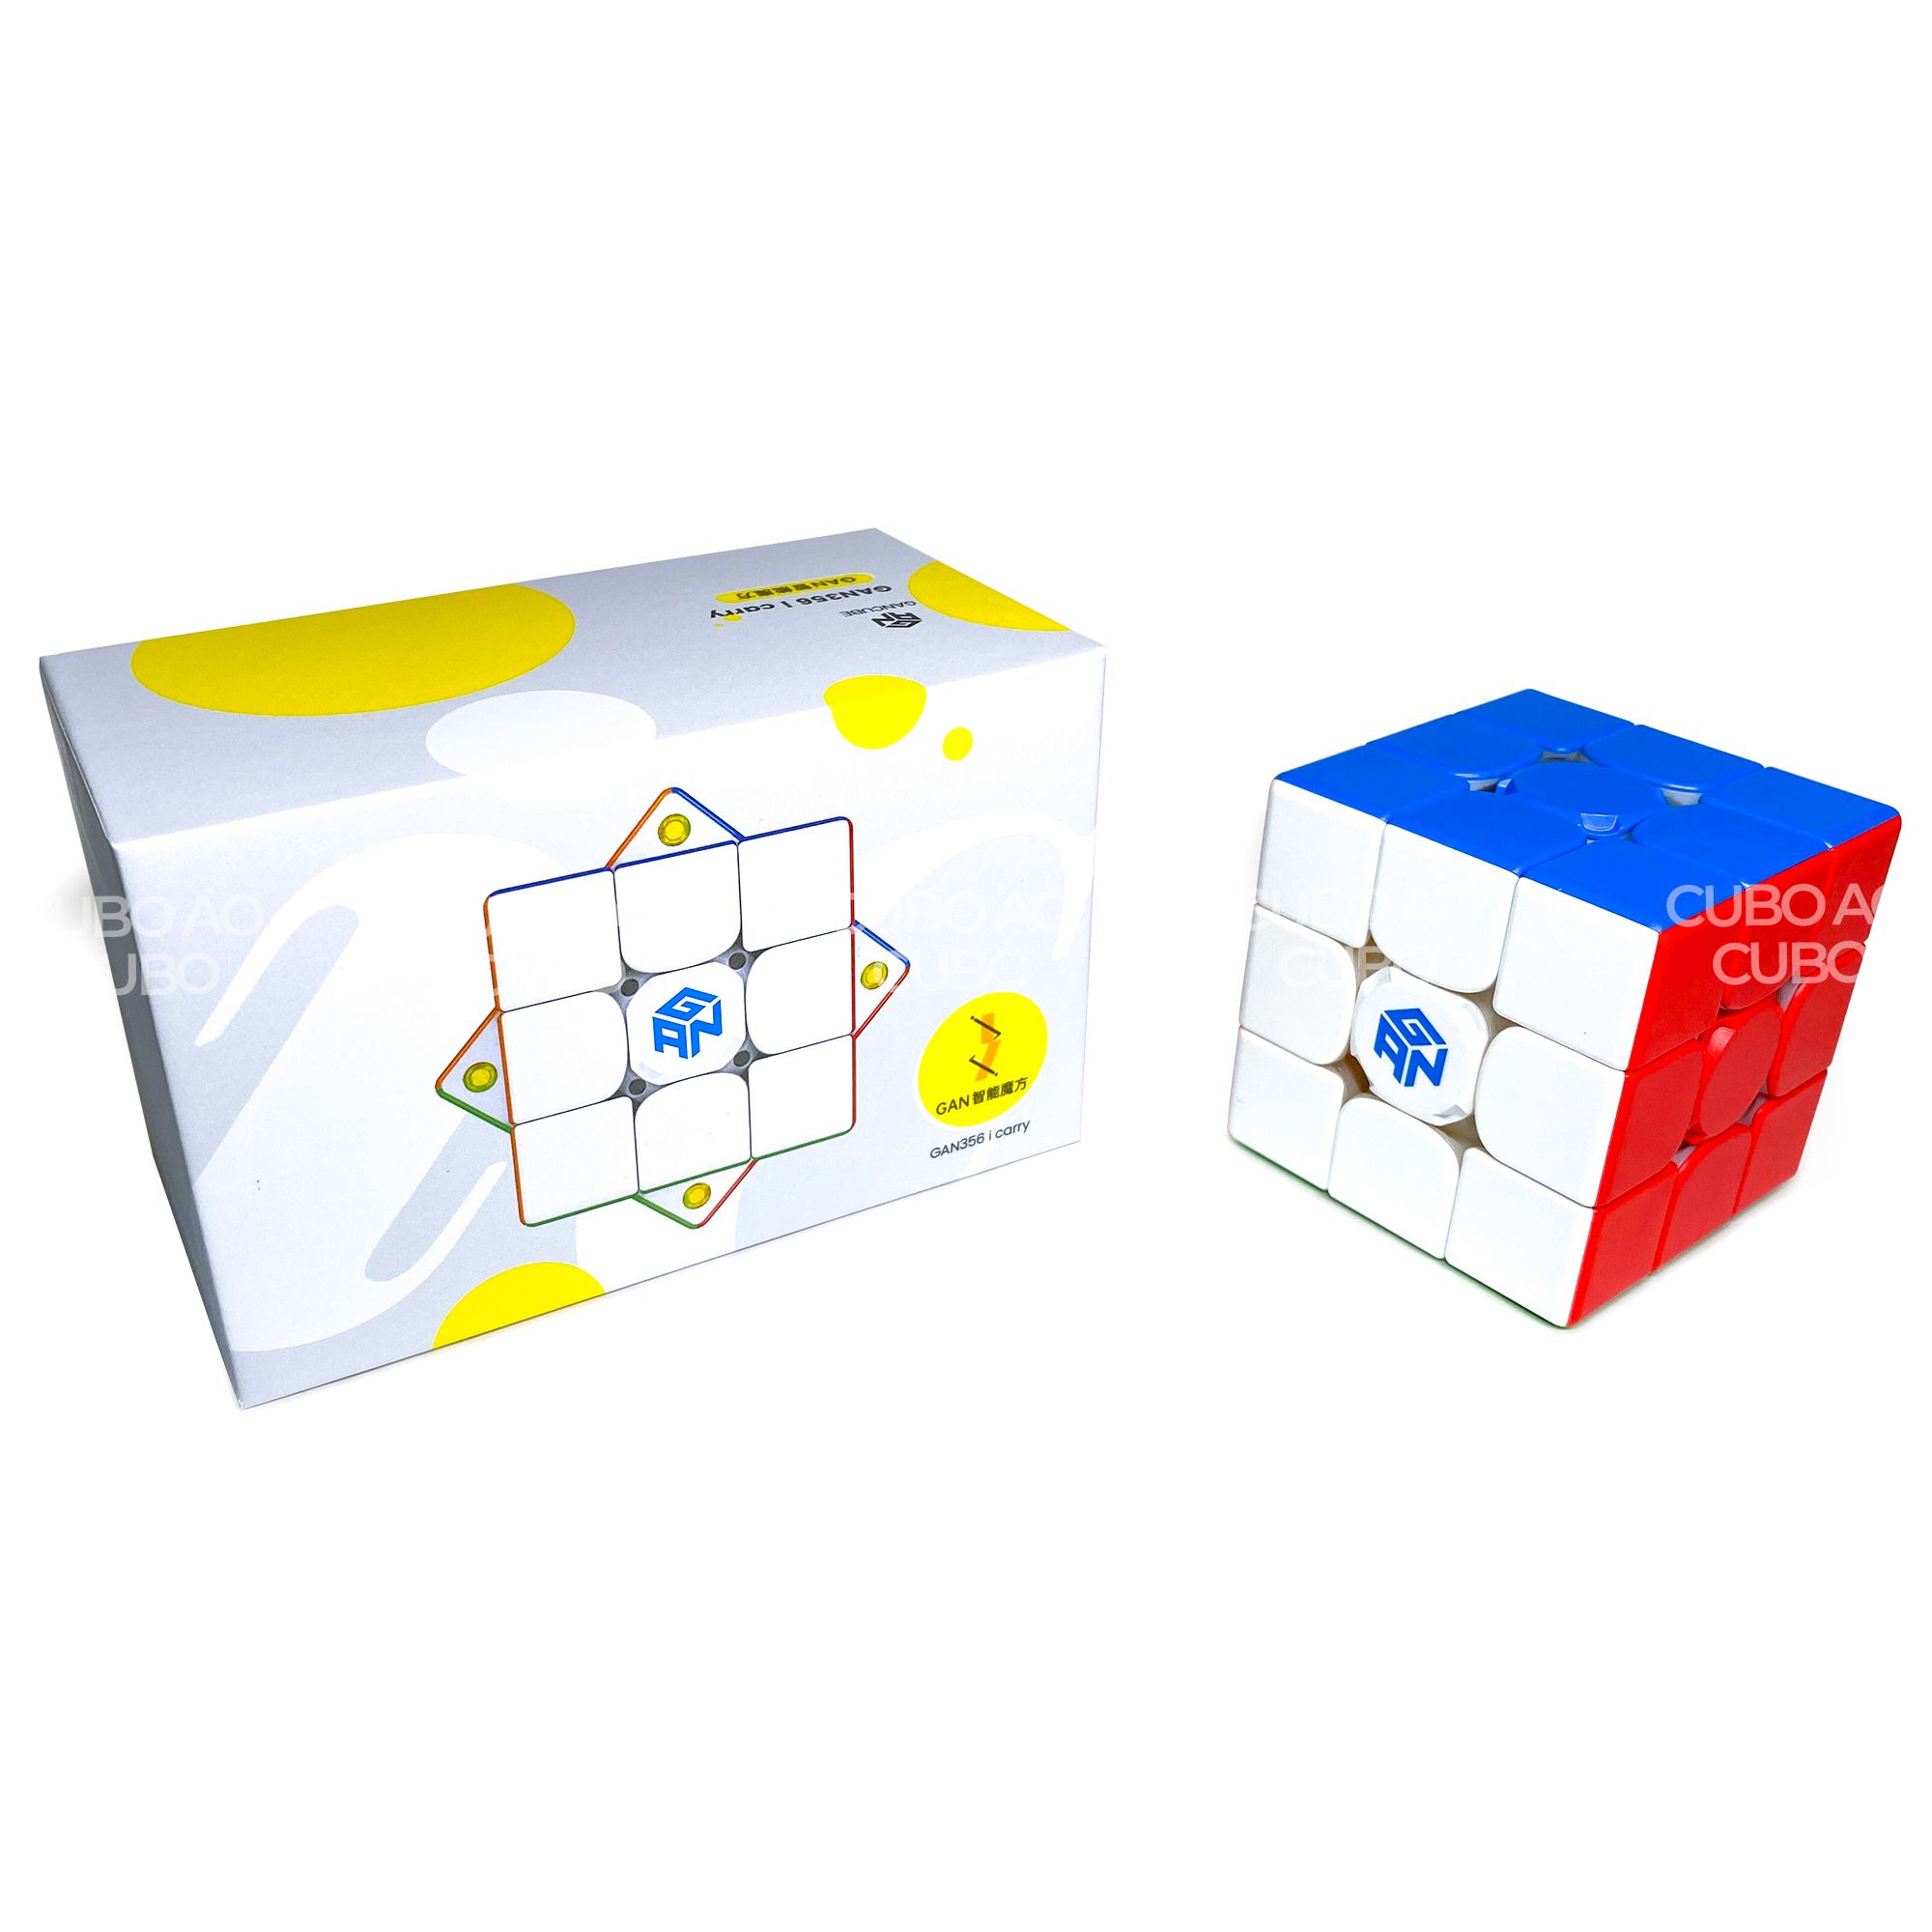 Cubo Mágico 3x3x3 GAN 356M Lite Magnético - Stickerless - Cubo ao